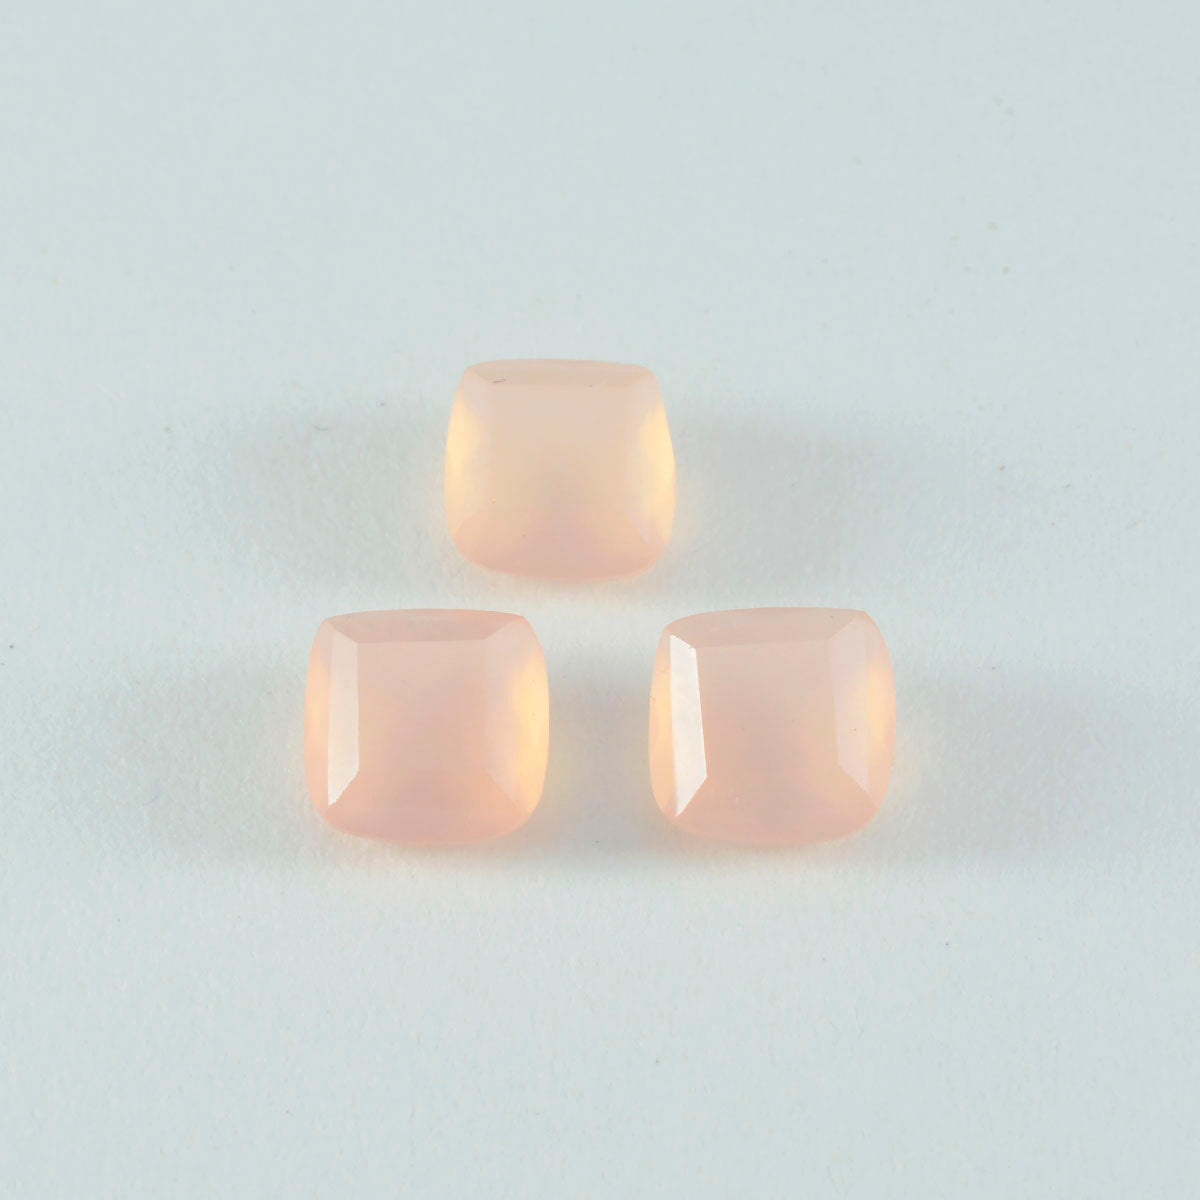 Riyogems 1PC roze rozenkwarts gefacetteerd 11x11 mm kussenvorm mooie kwaliteit losse steen